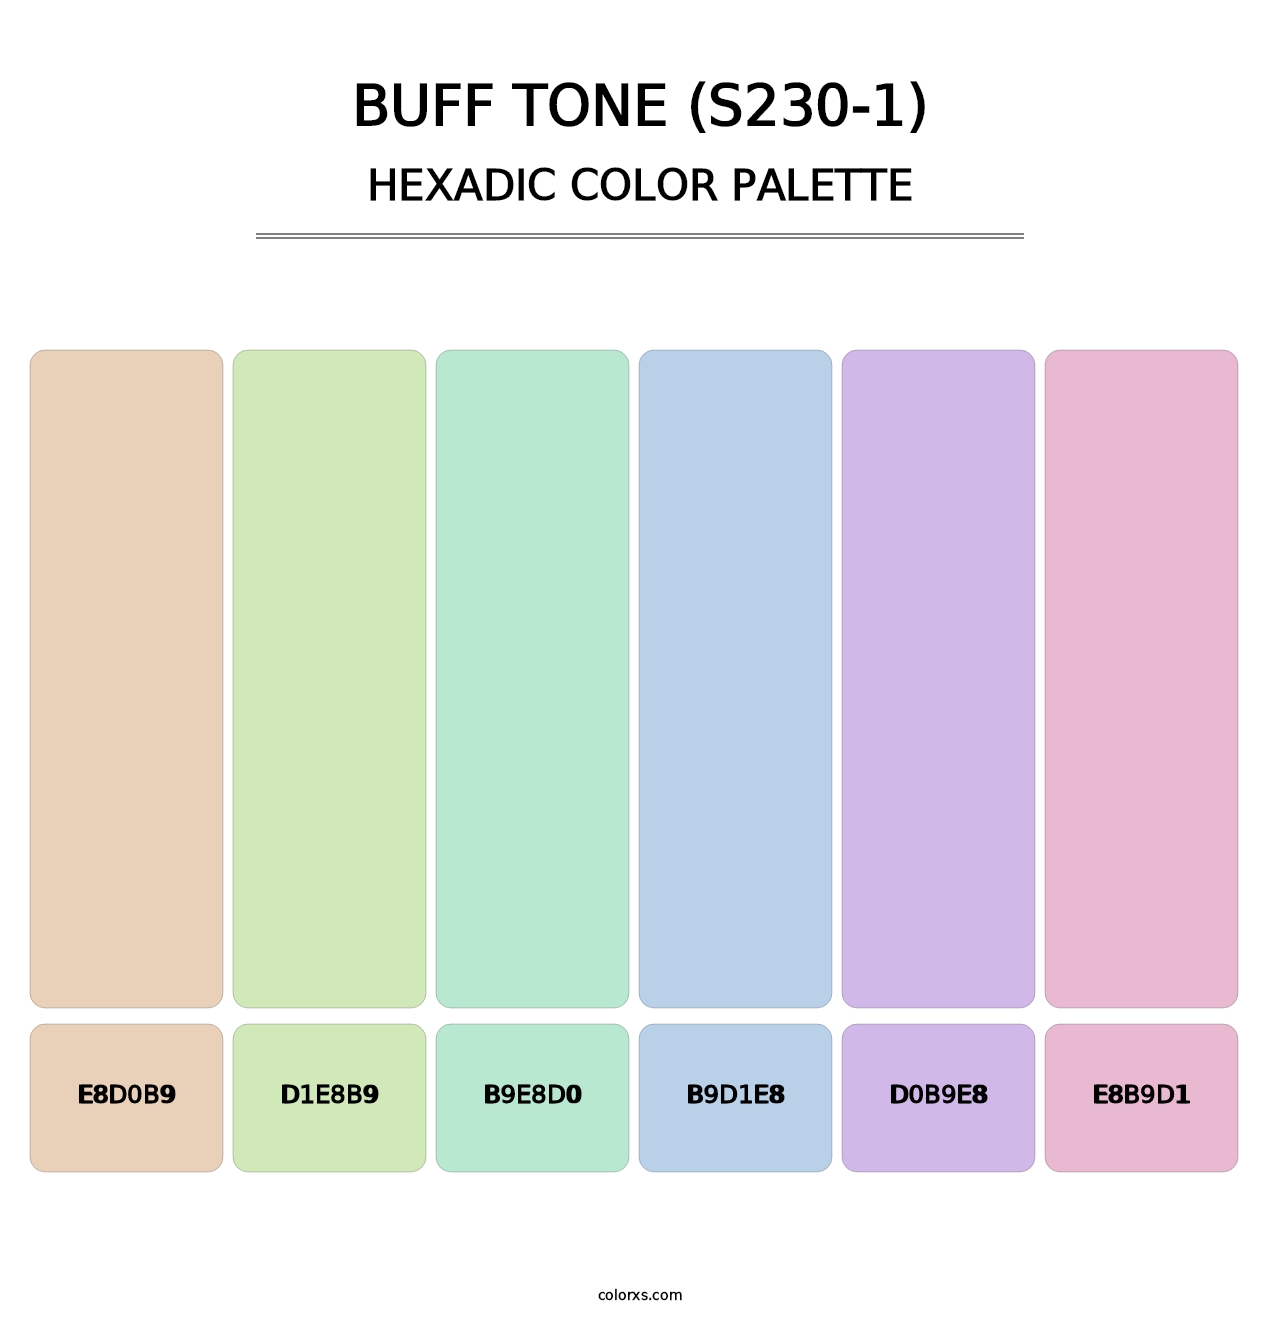 Buff Tone (S230-1) - Hexadic Color Palette